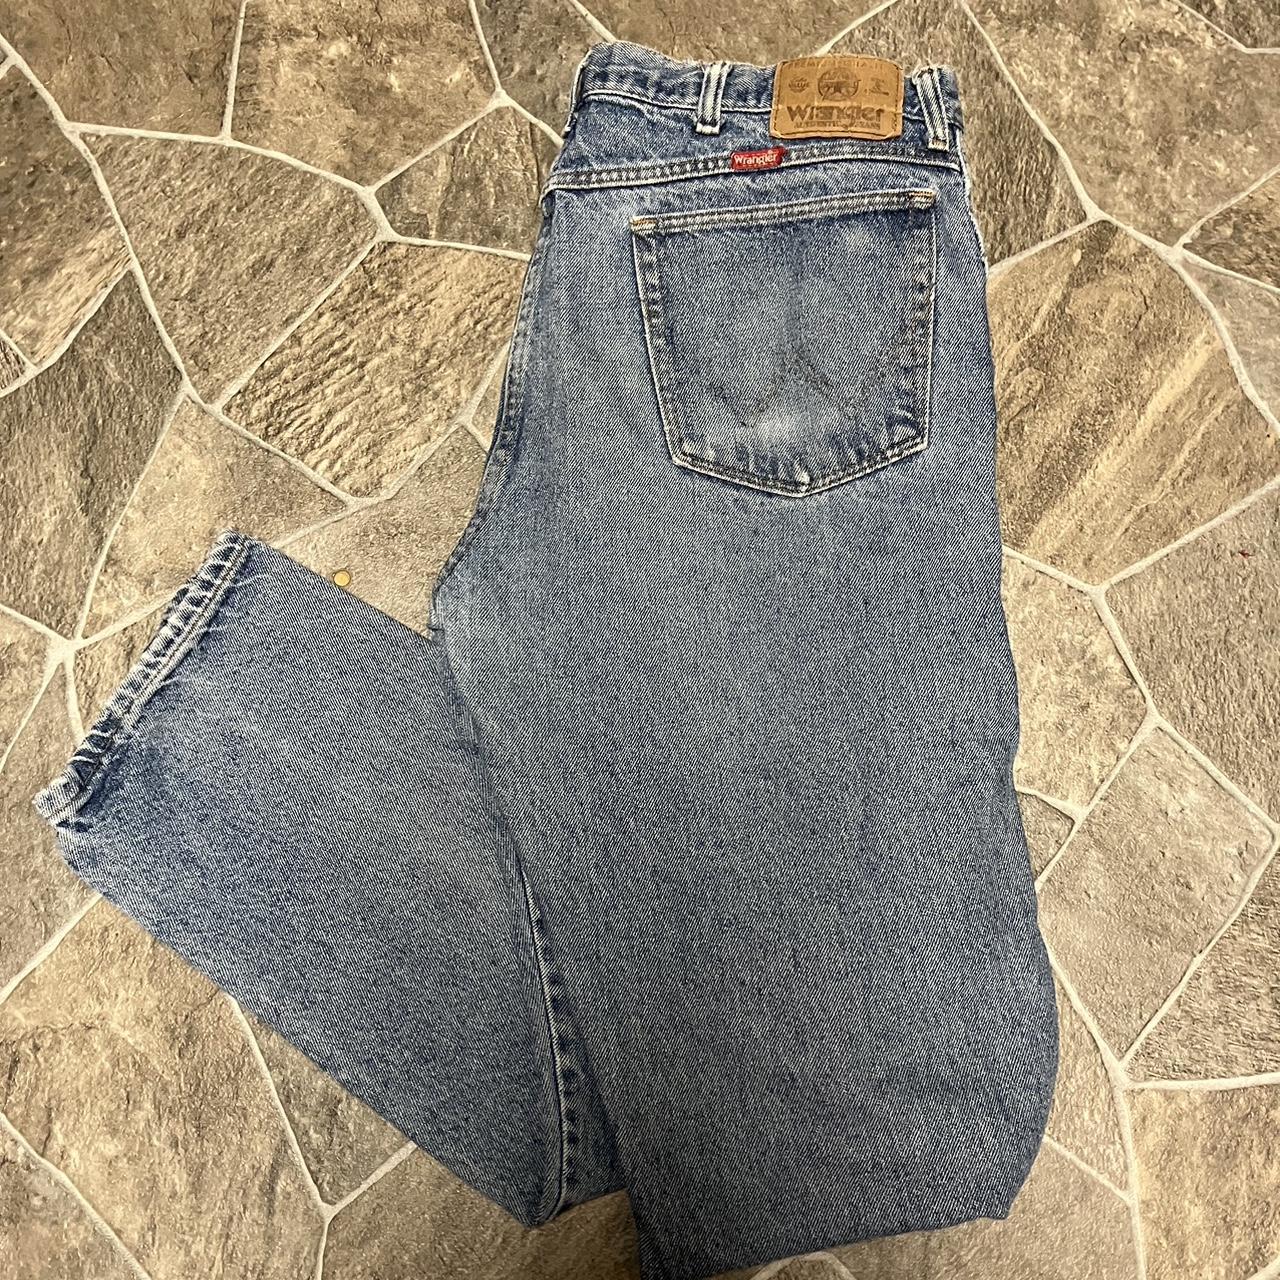 Used wrangler jeans size 30x30 - Depop